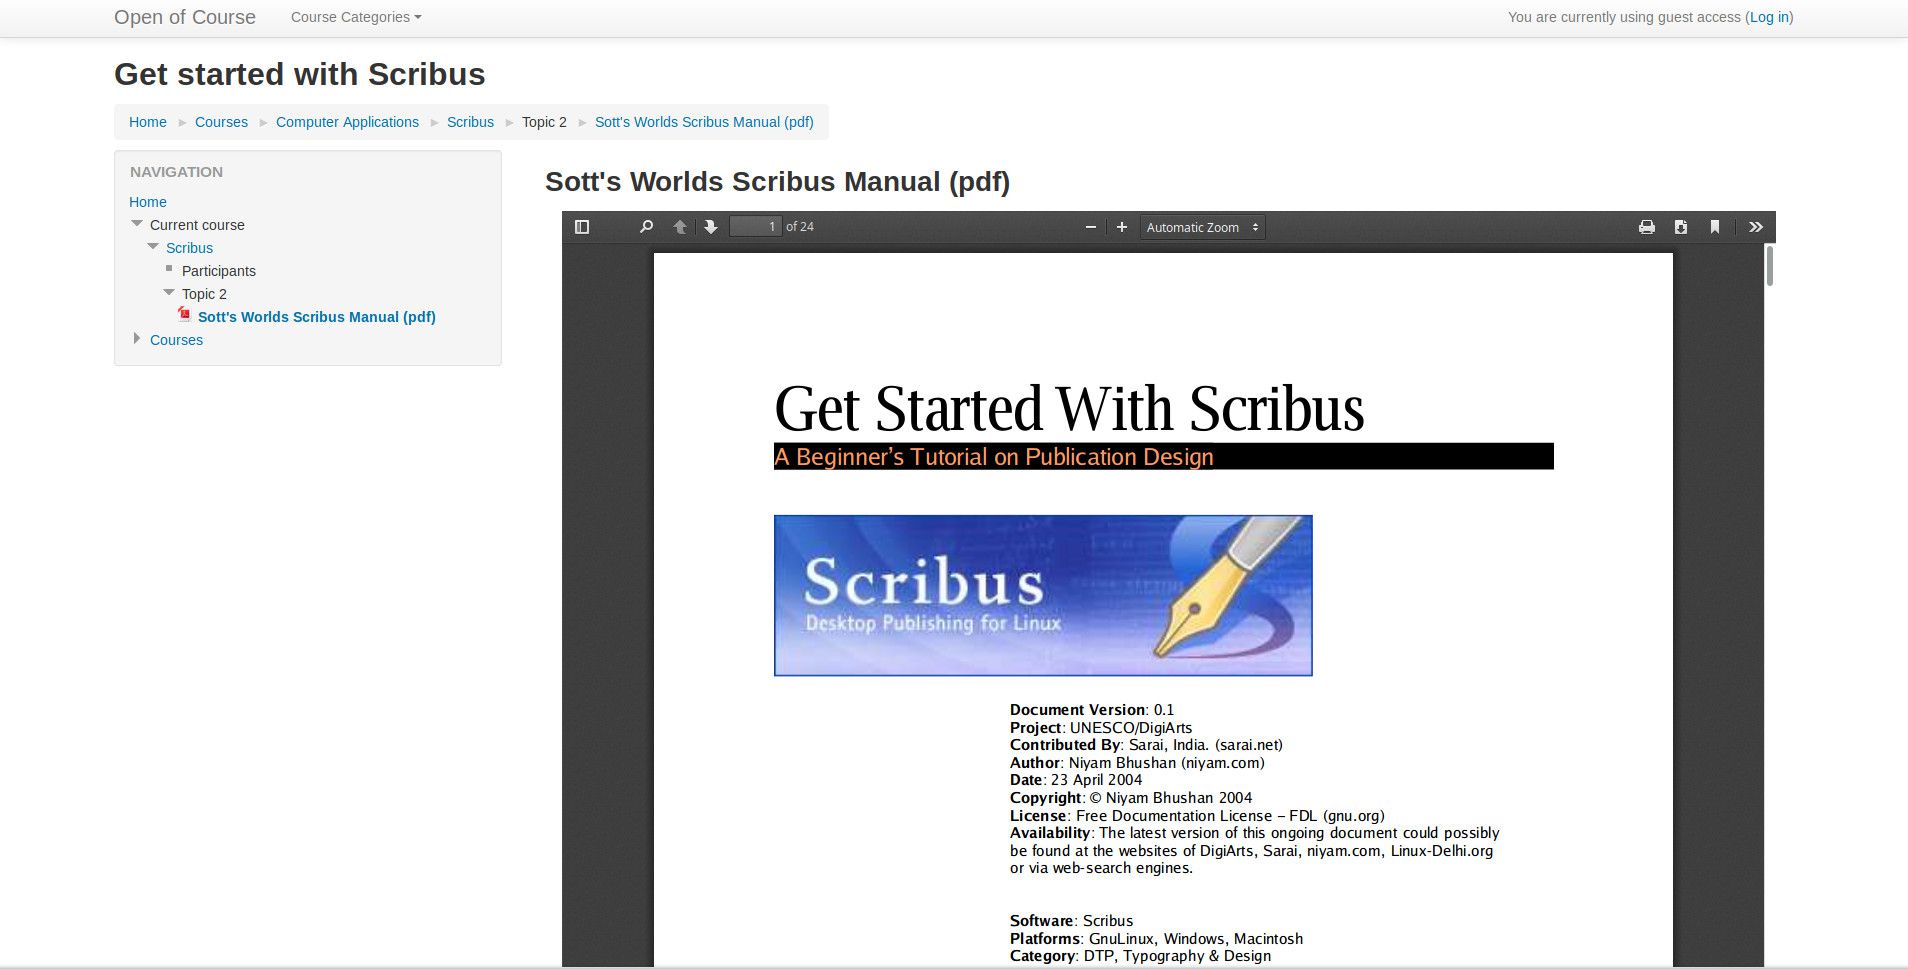 Sott's World Scribus Manual